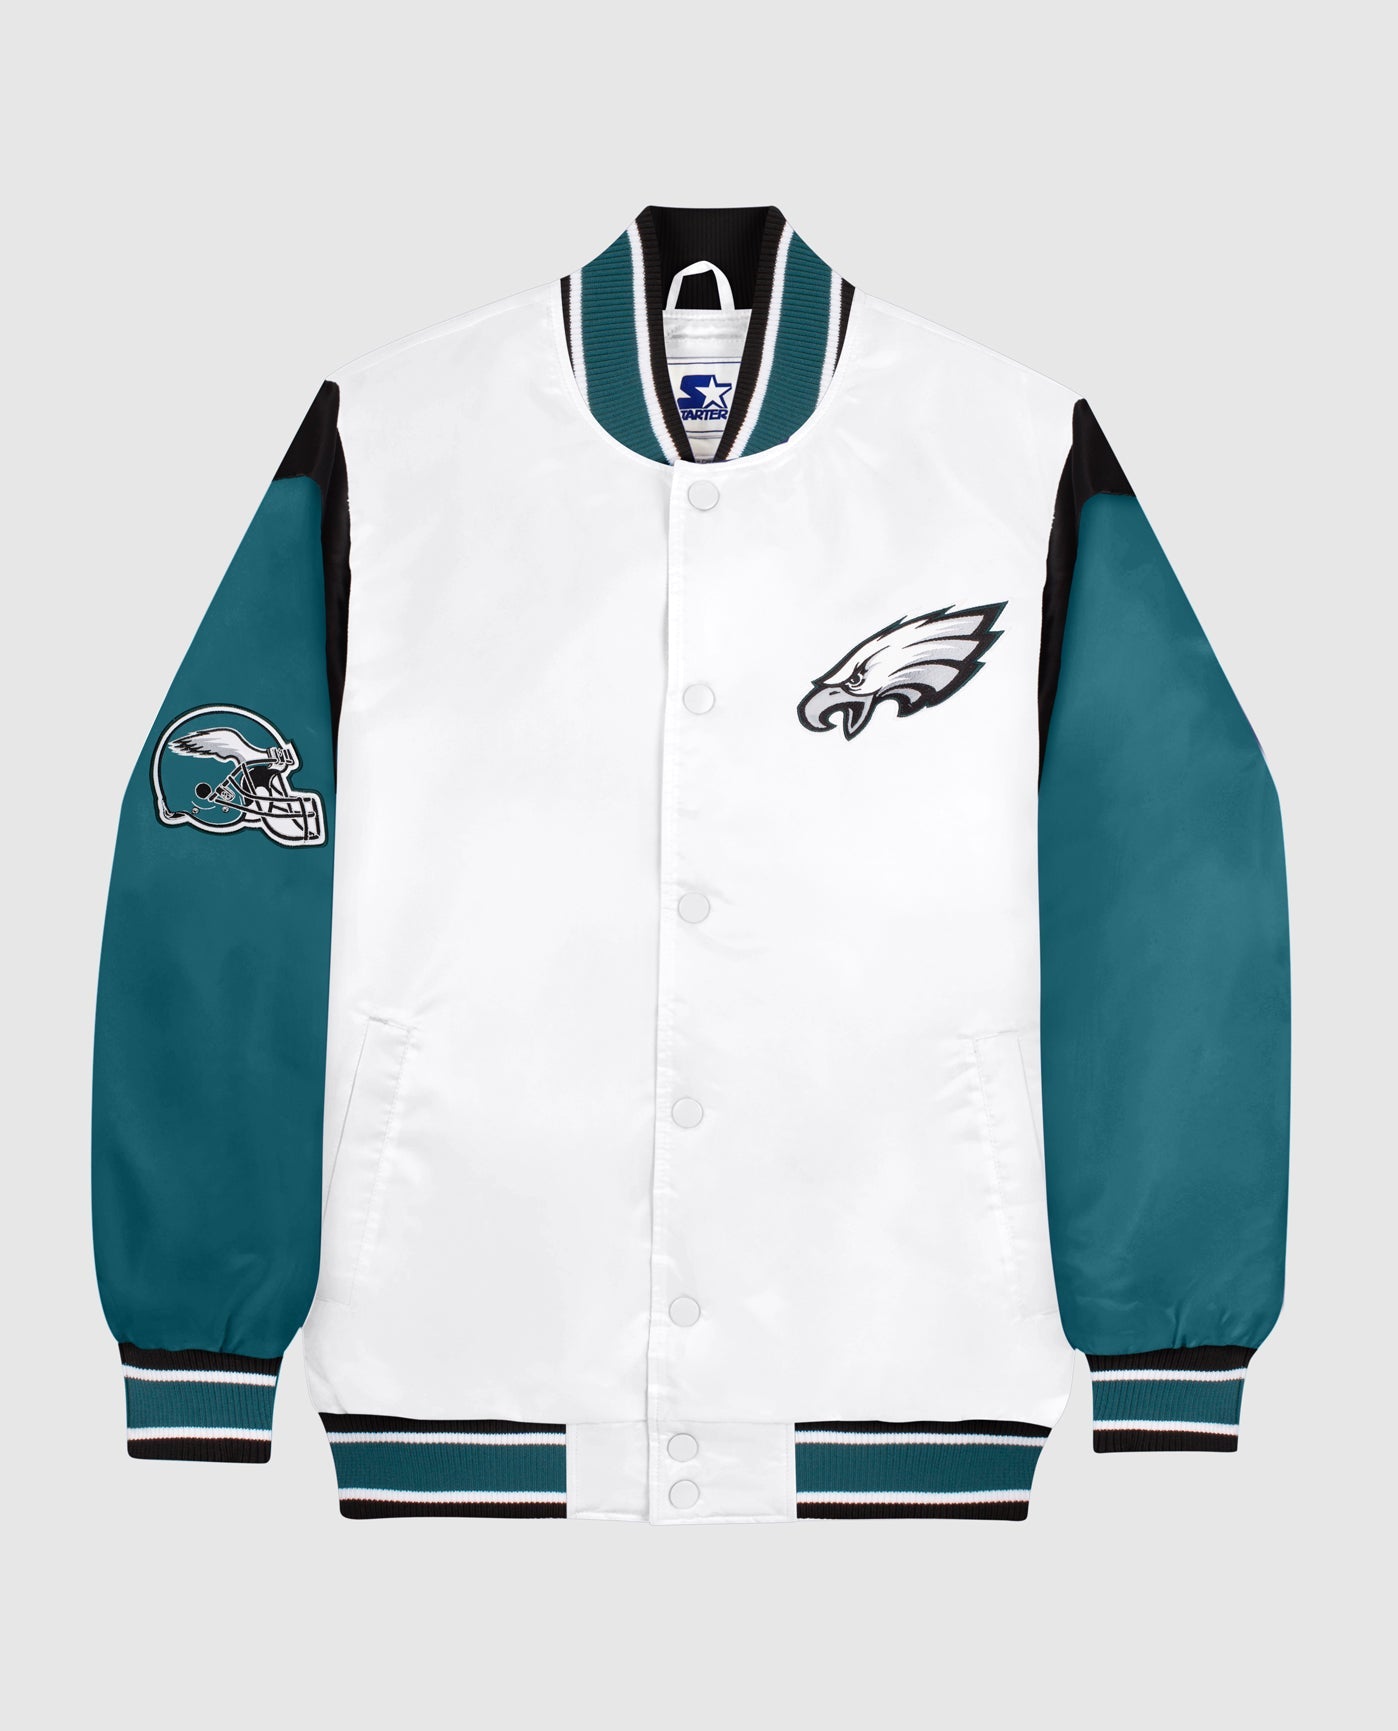 philadelphia eagles jackets for sale